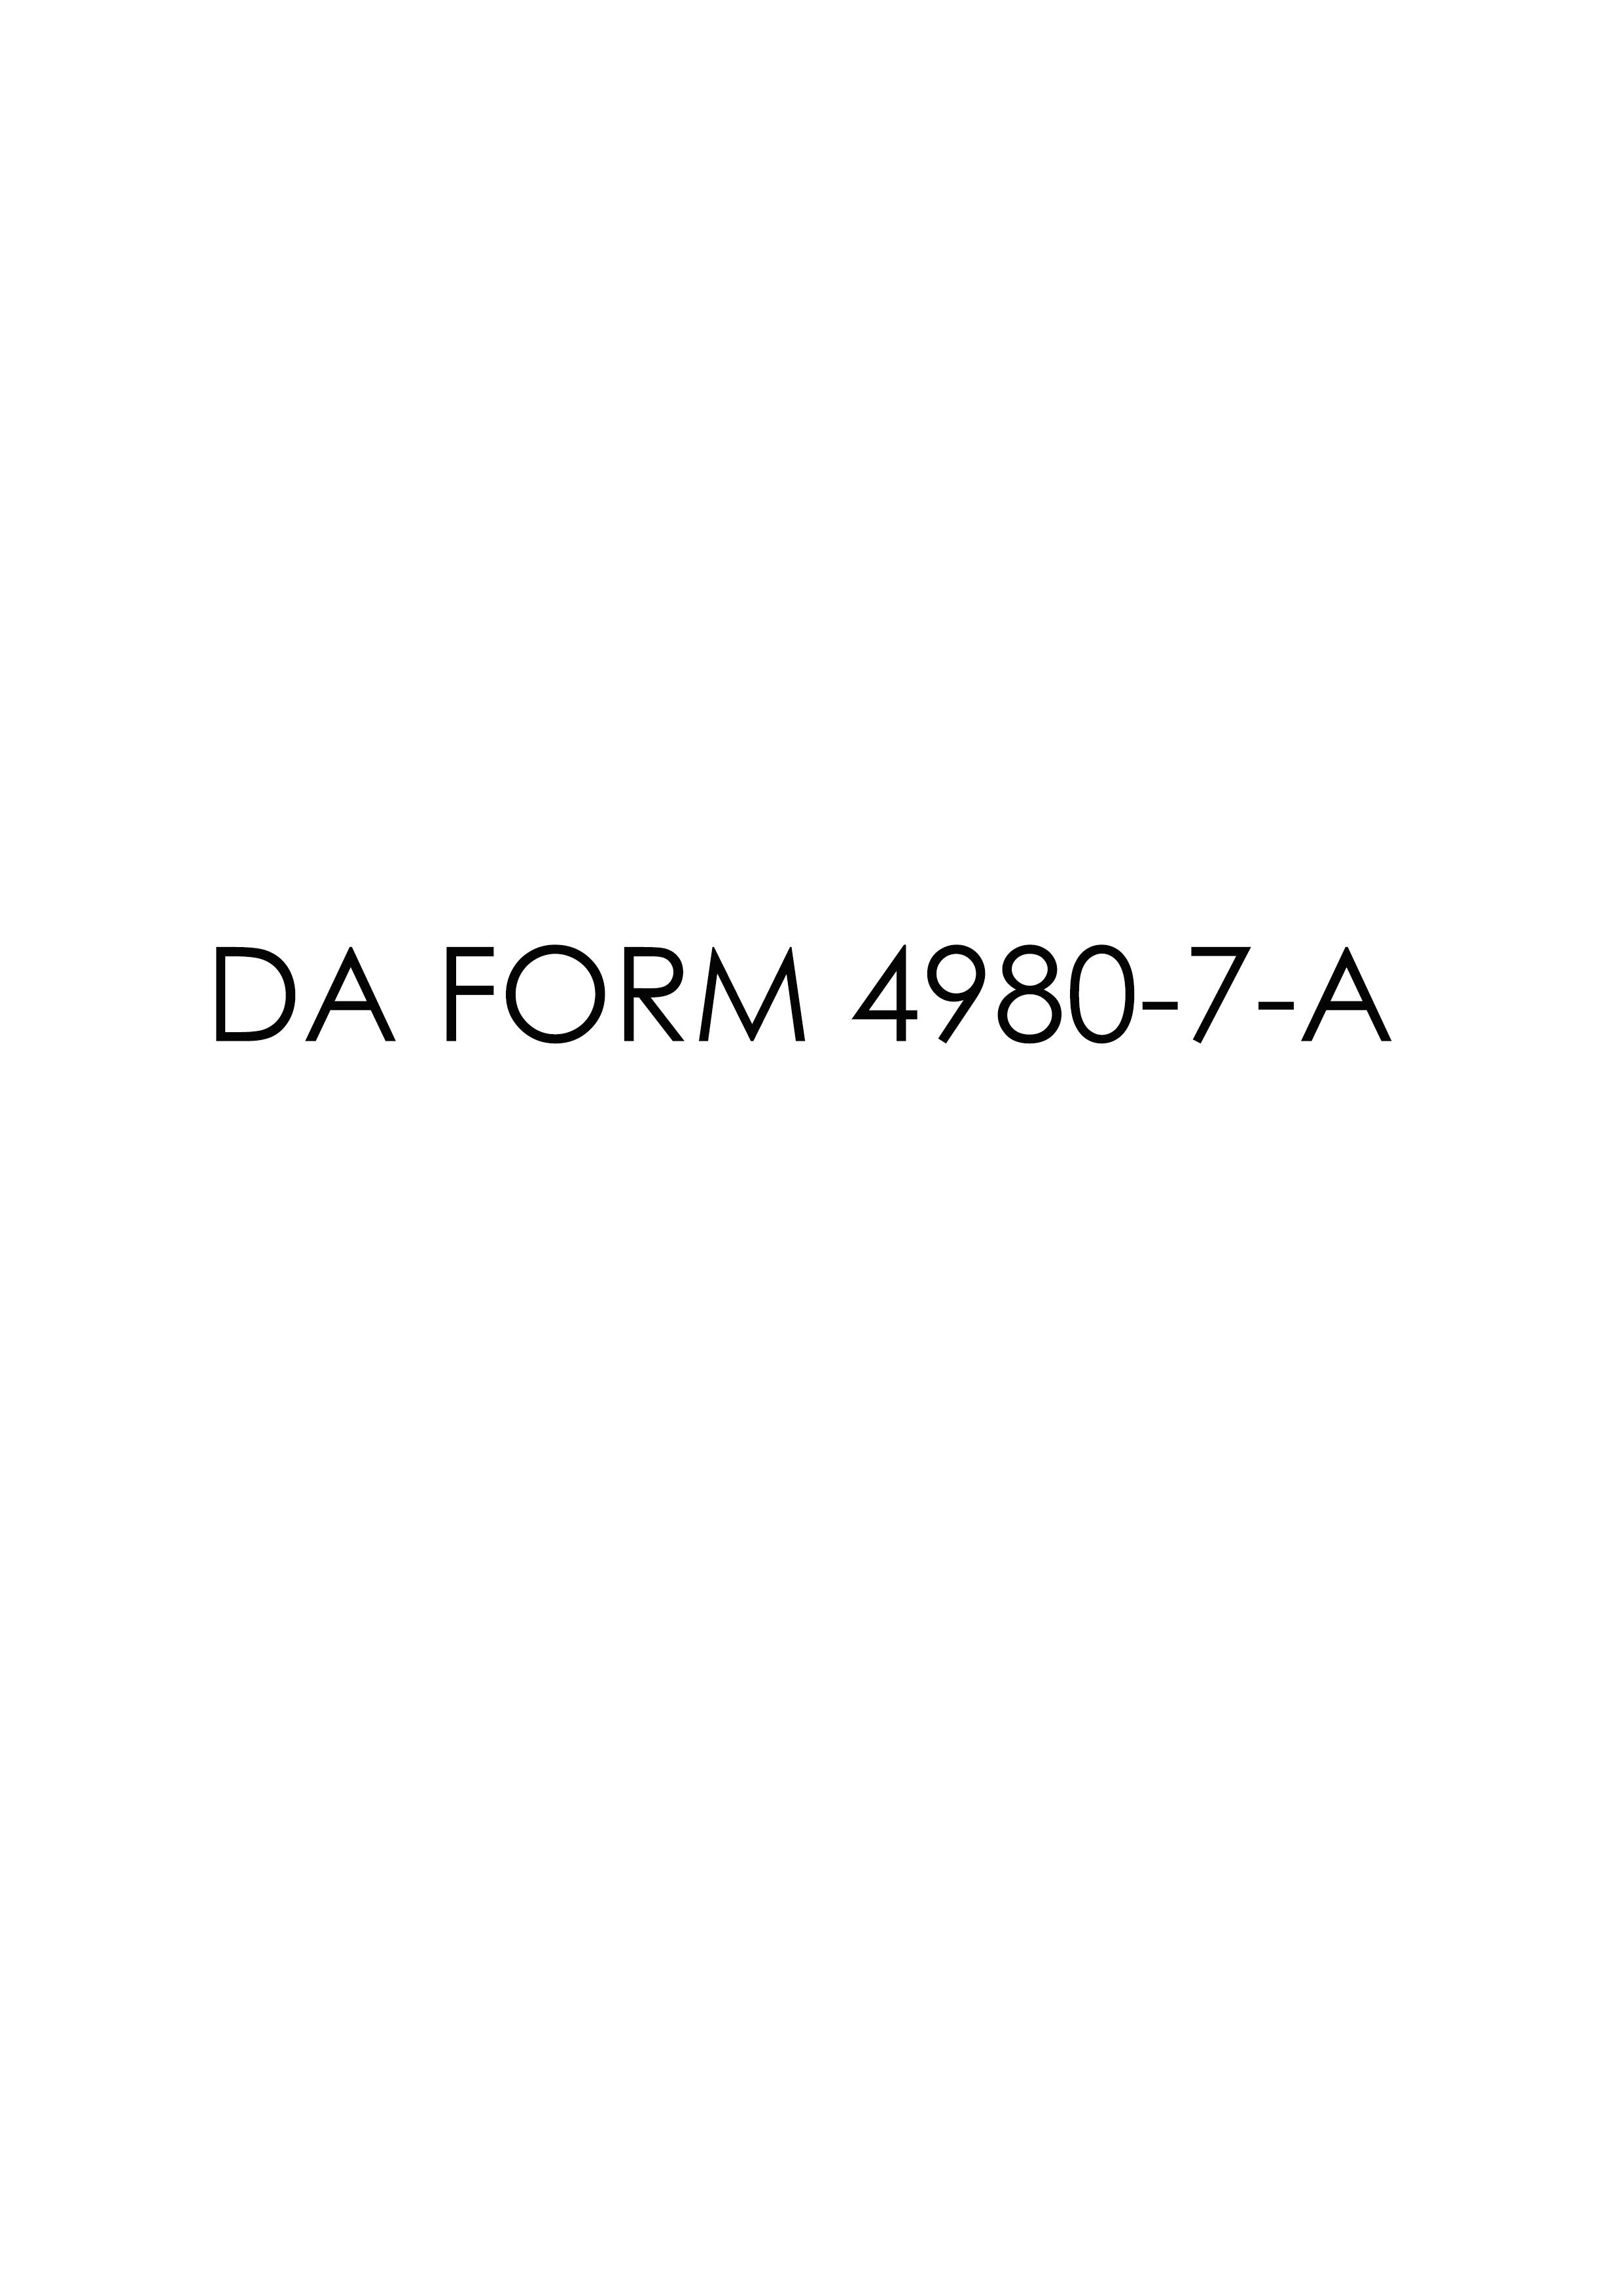 da Form 4980-7-A fillable